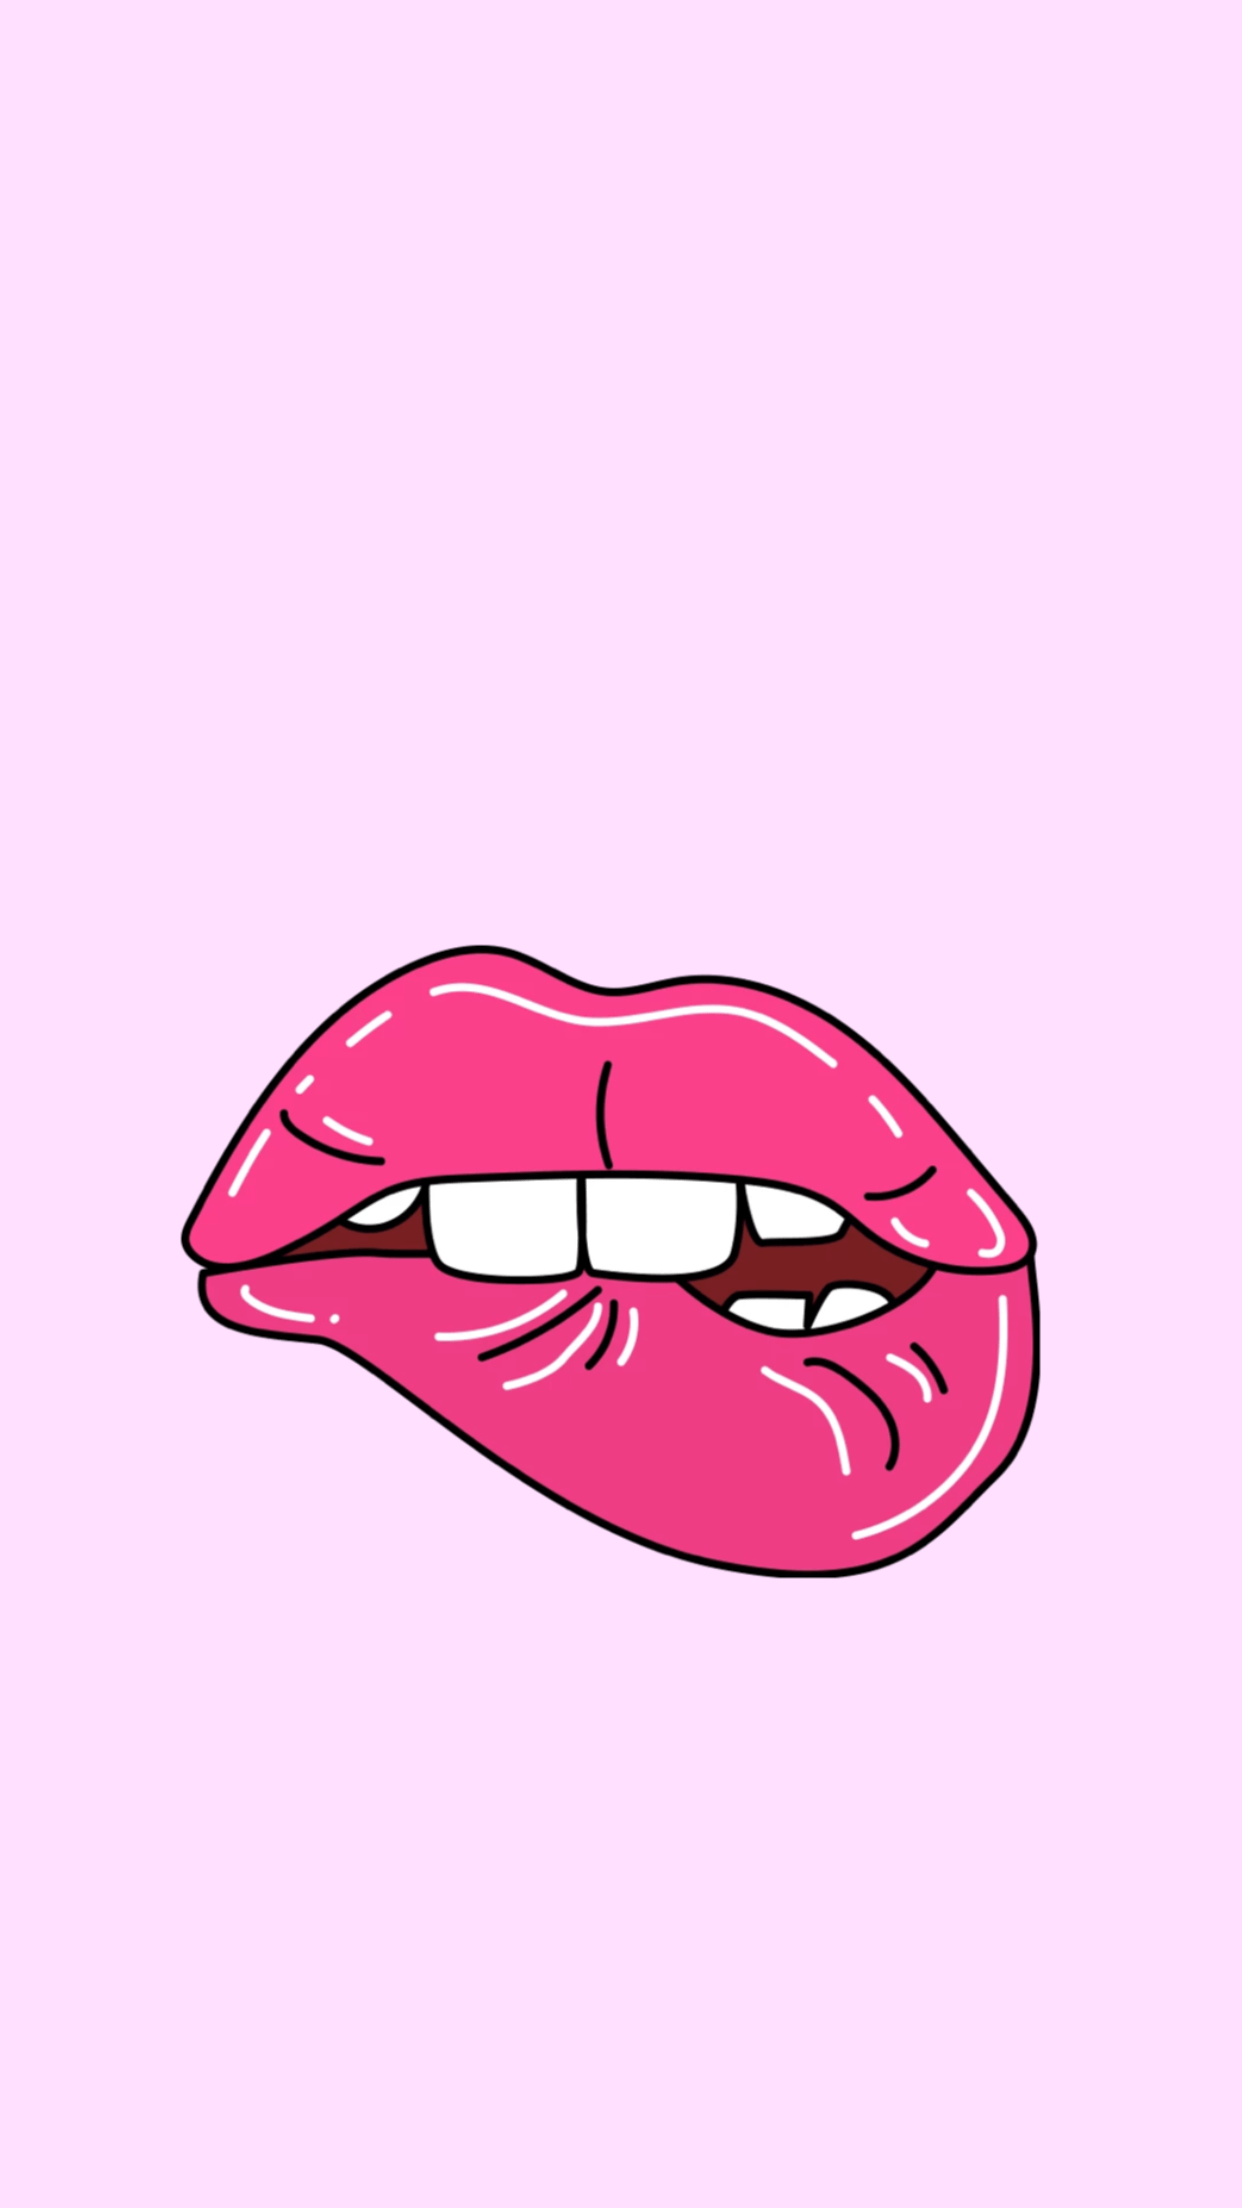 pinklipswallpaper. Pink lips. Wallpaper, Lips and Sketches